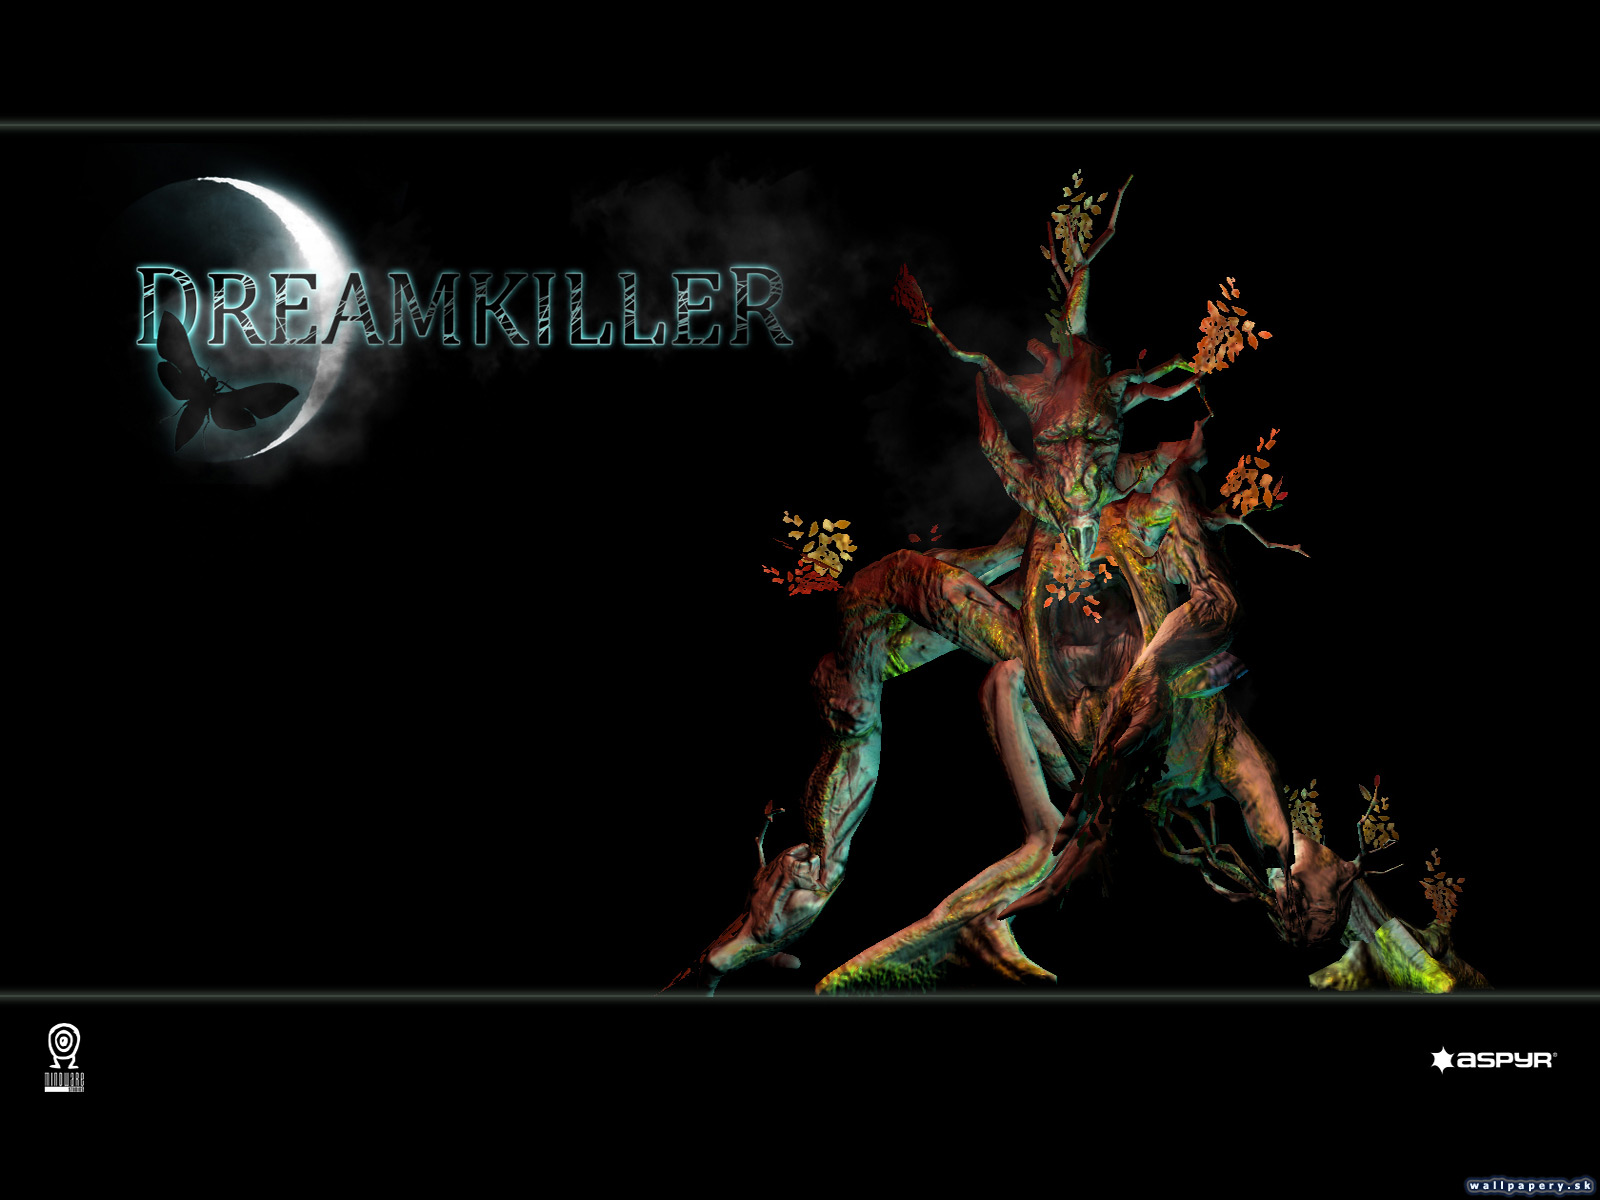 Dreamkiller - wallpaper 9